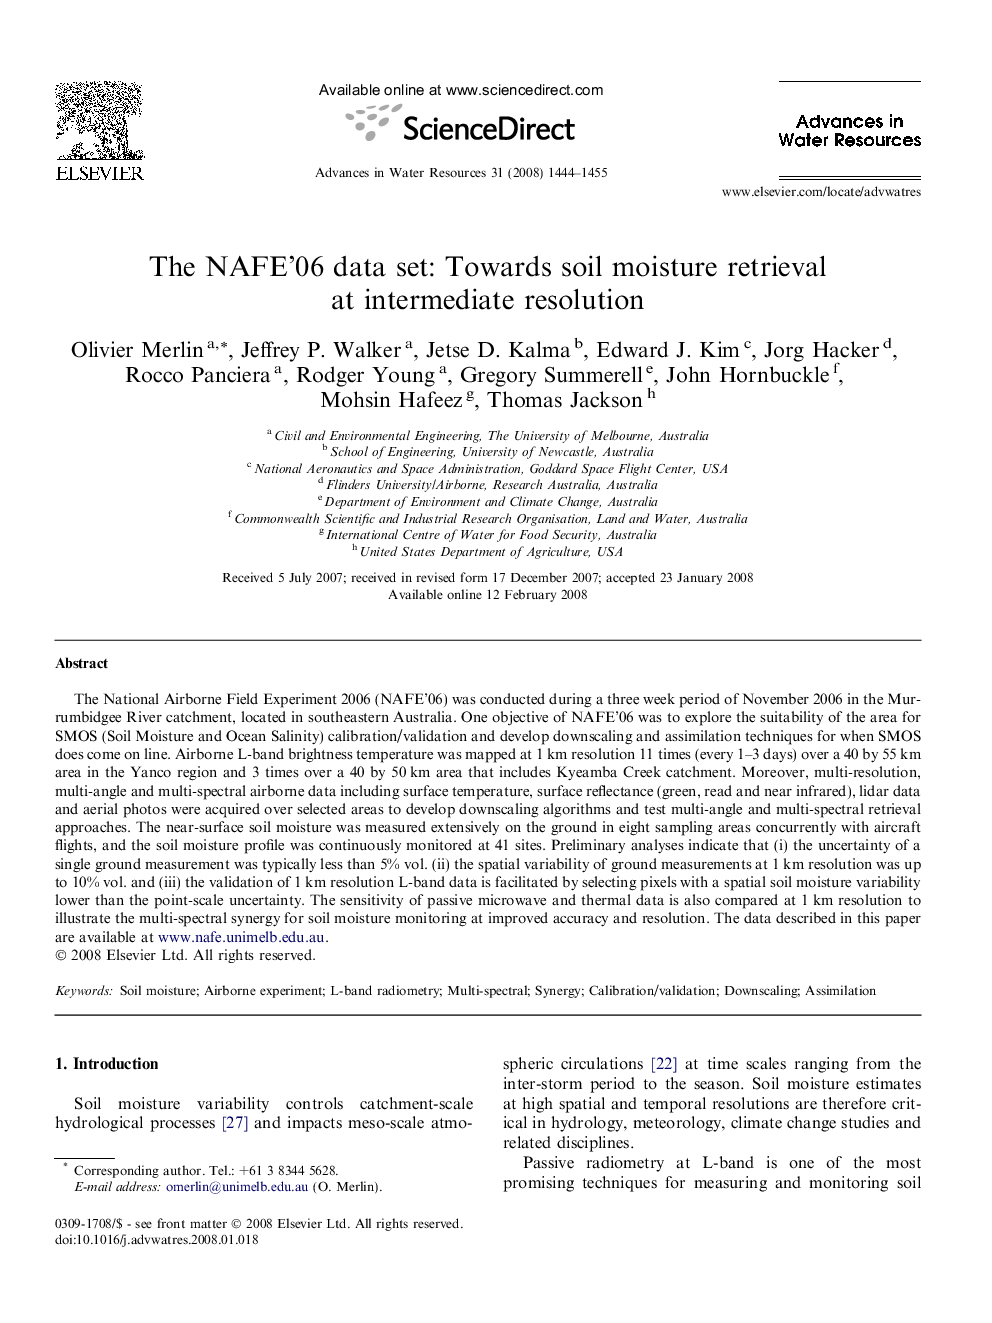 The NAFE’06 data set: Towards soil moisture retrieval at intermediate resolution